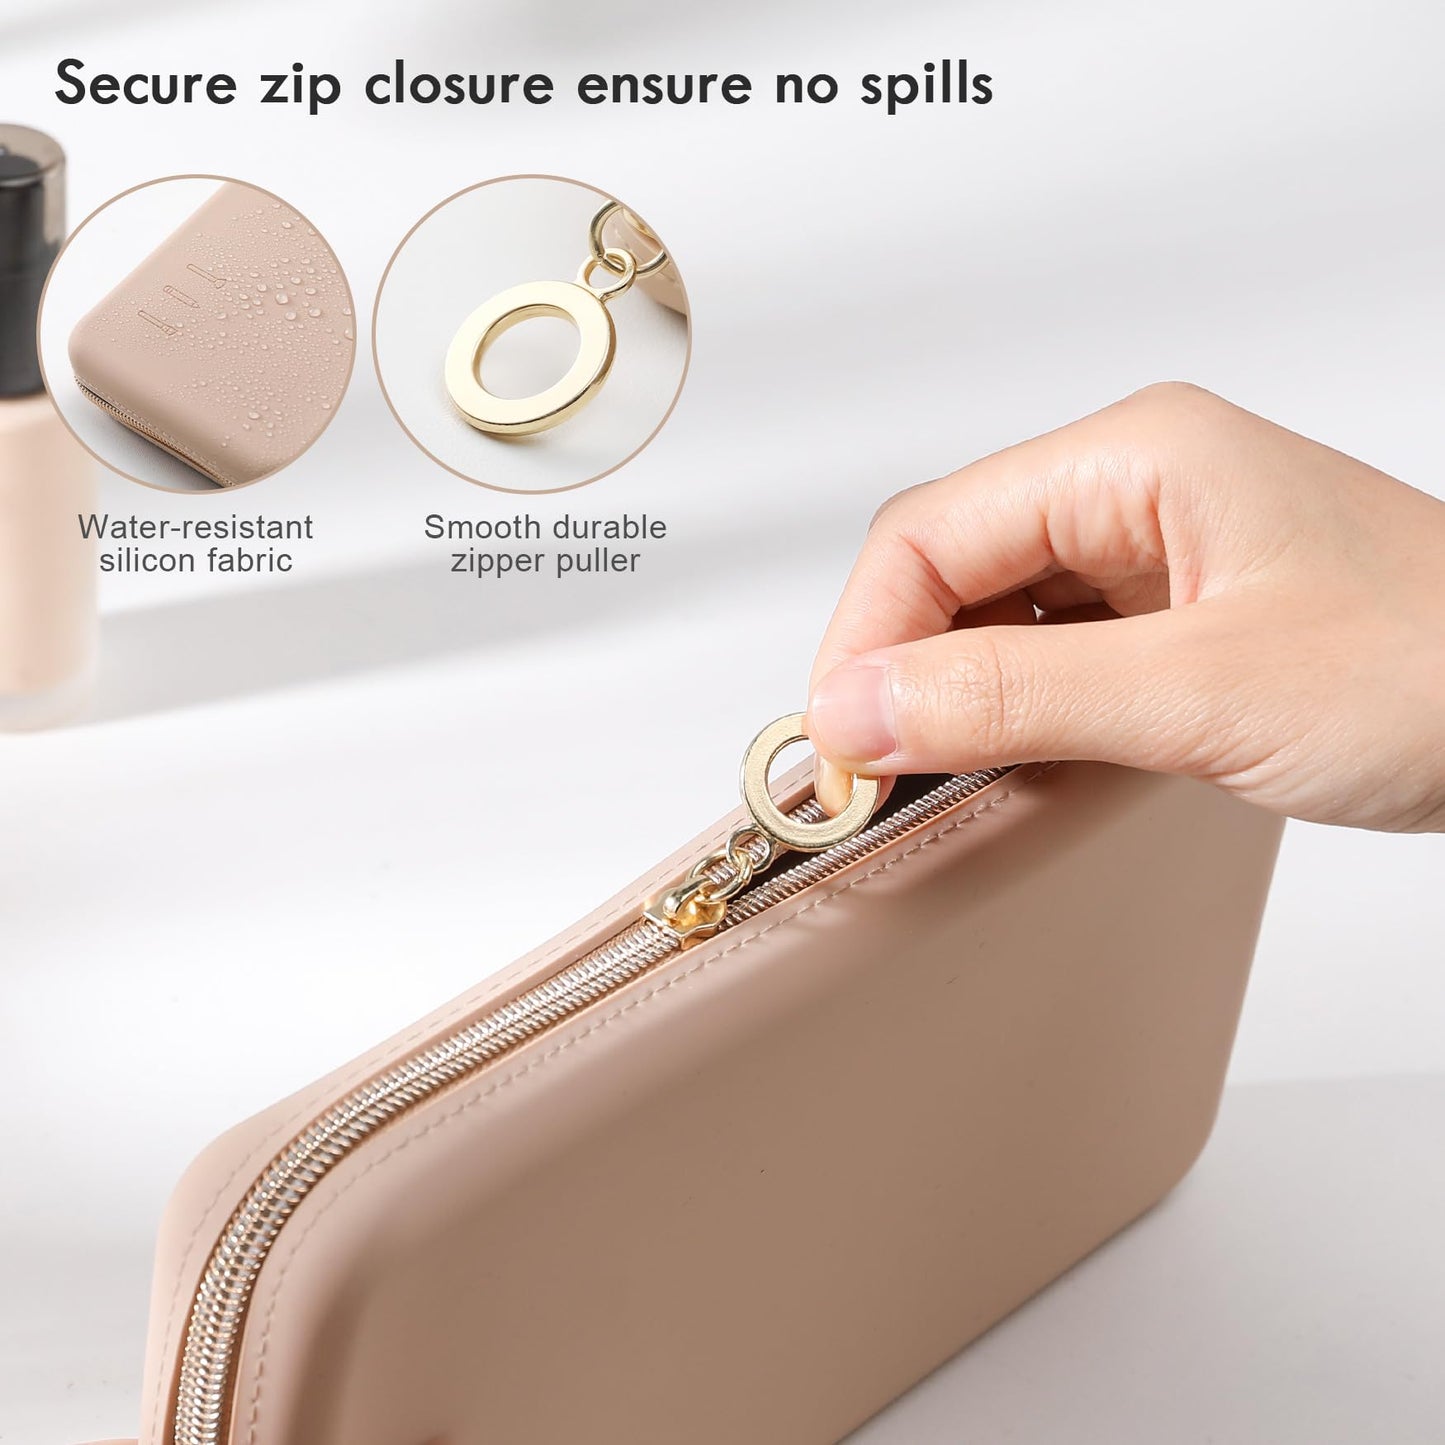 FVION Zipper Makeup Brushes Bag For Travel, Large Silicone Makeup Brush Holder, Make Up Brushes Pouch Case for Makeup Tools - Khaki